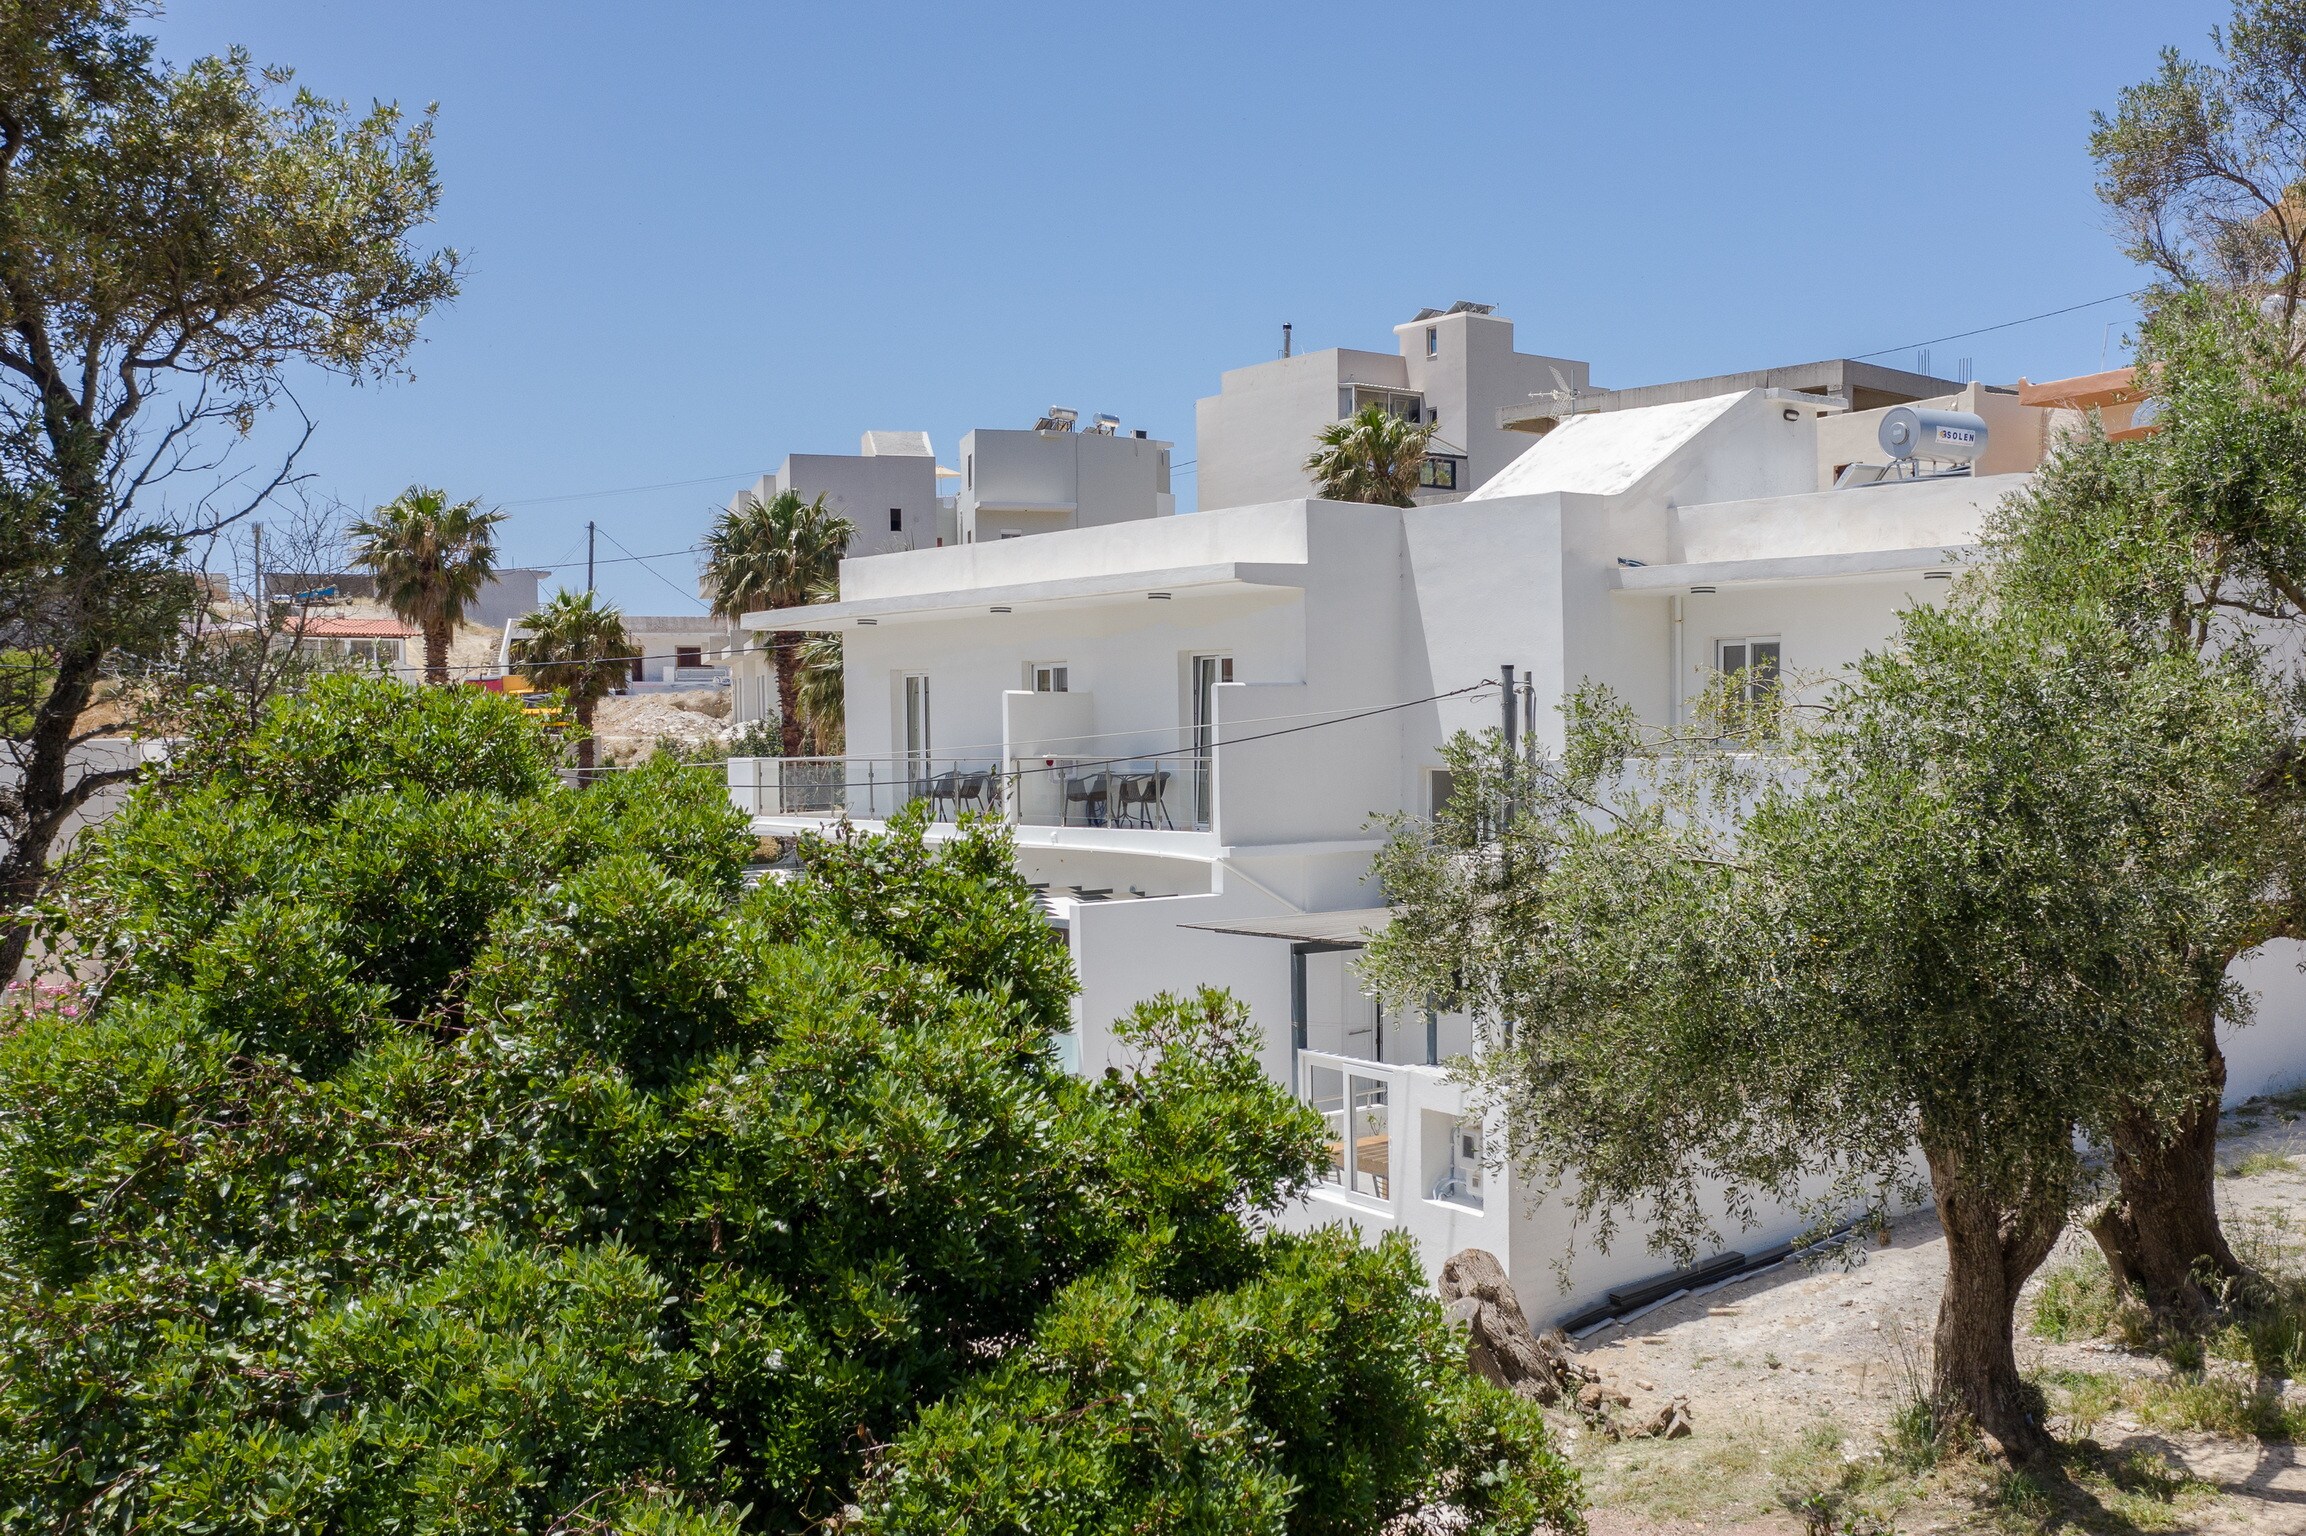 Exterior view of Cozy studio neat the beach & amenities, Plakias,Crete